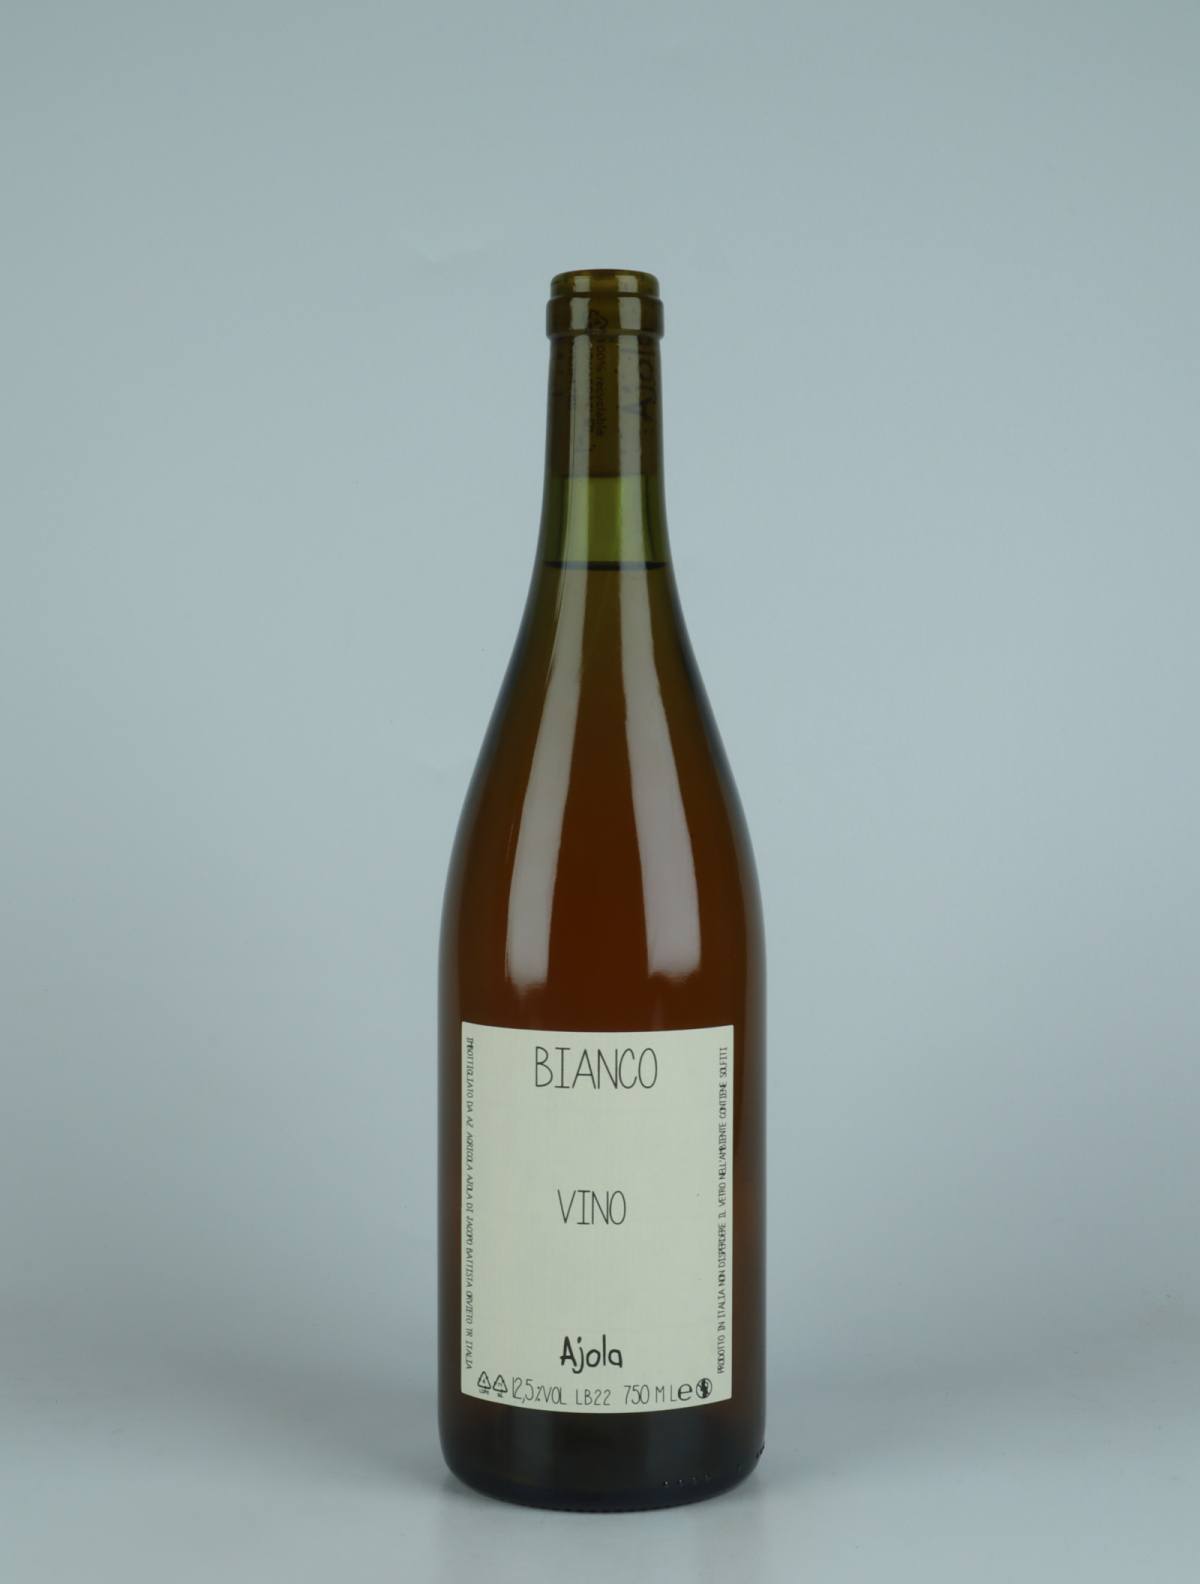 En flaske 2022 Vino Bianco Orange vin fra Ajola, Umbrien i Italien